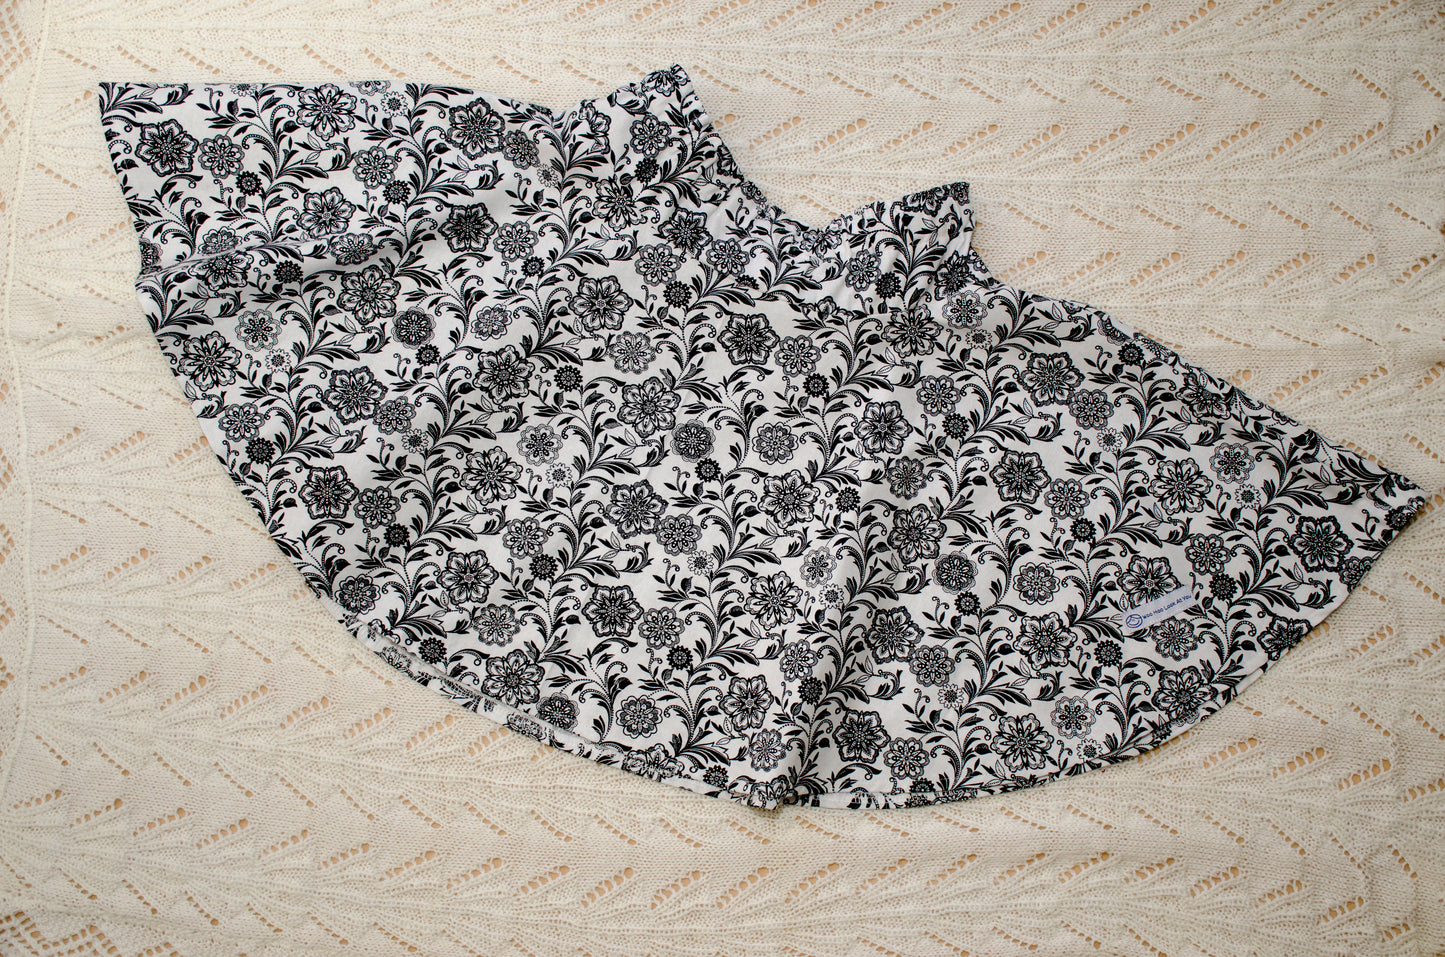 Skirt - Elastic Waist, 100% Cotton, Black and White Floral Fabric, Circular Skirt